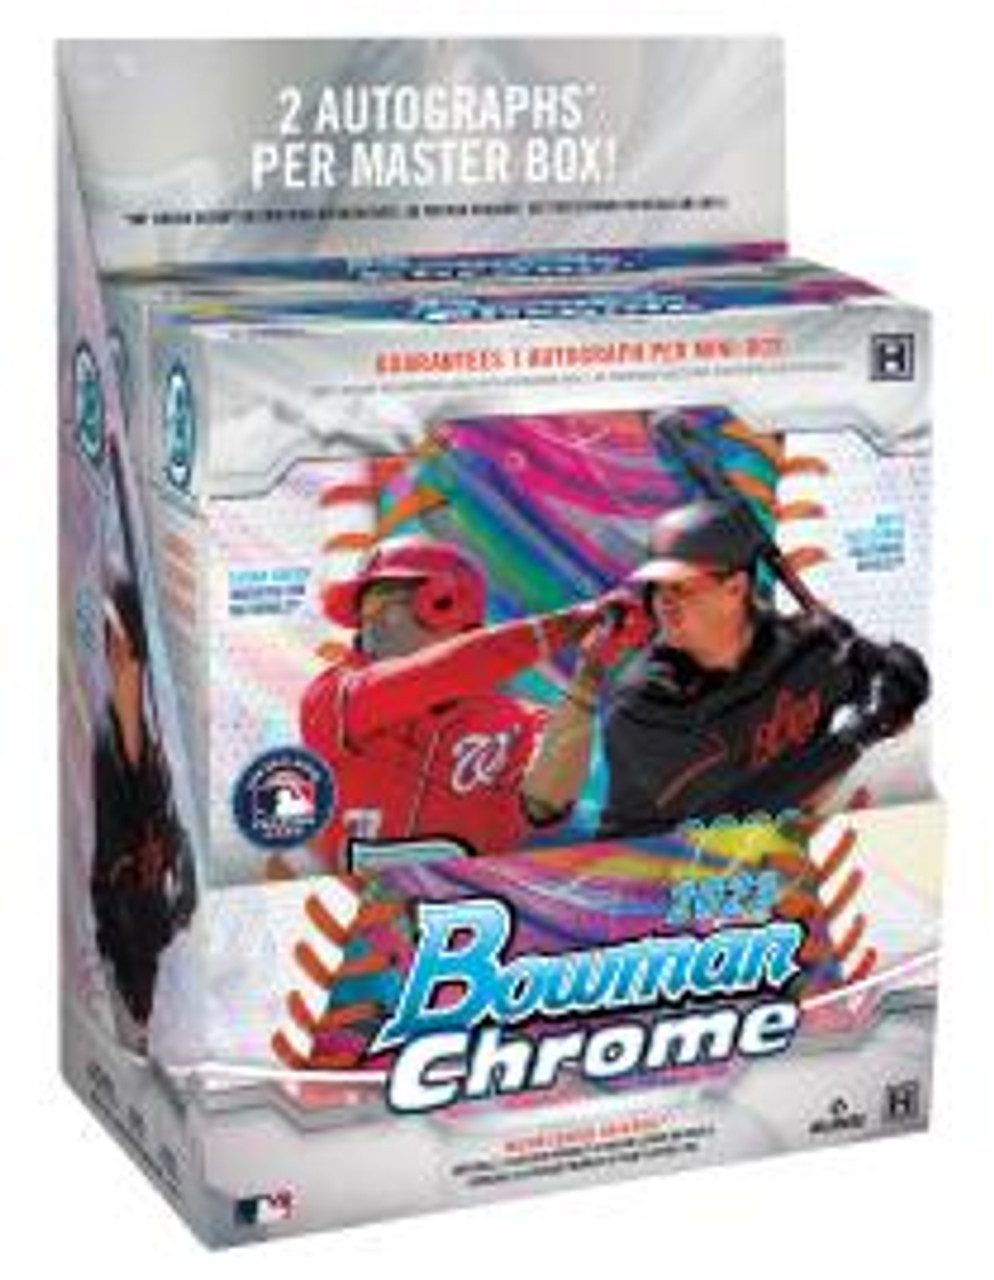 2023 Bowman Chrome Baseball Hobby Box - Legends Fan Shop